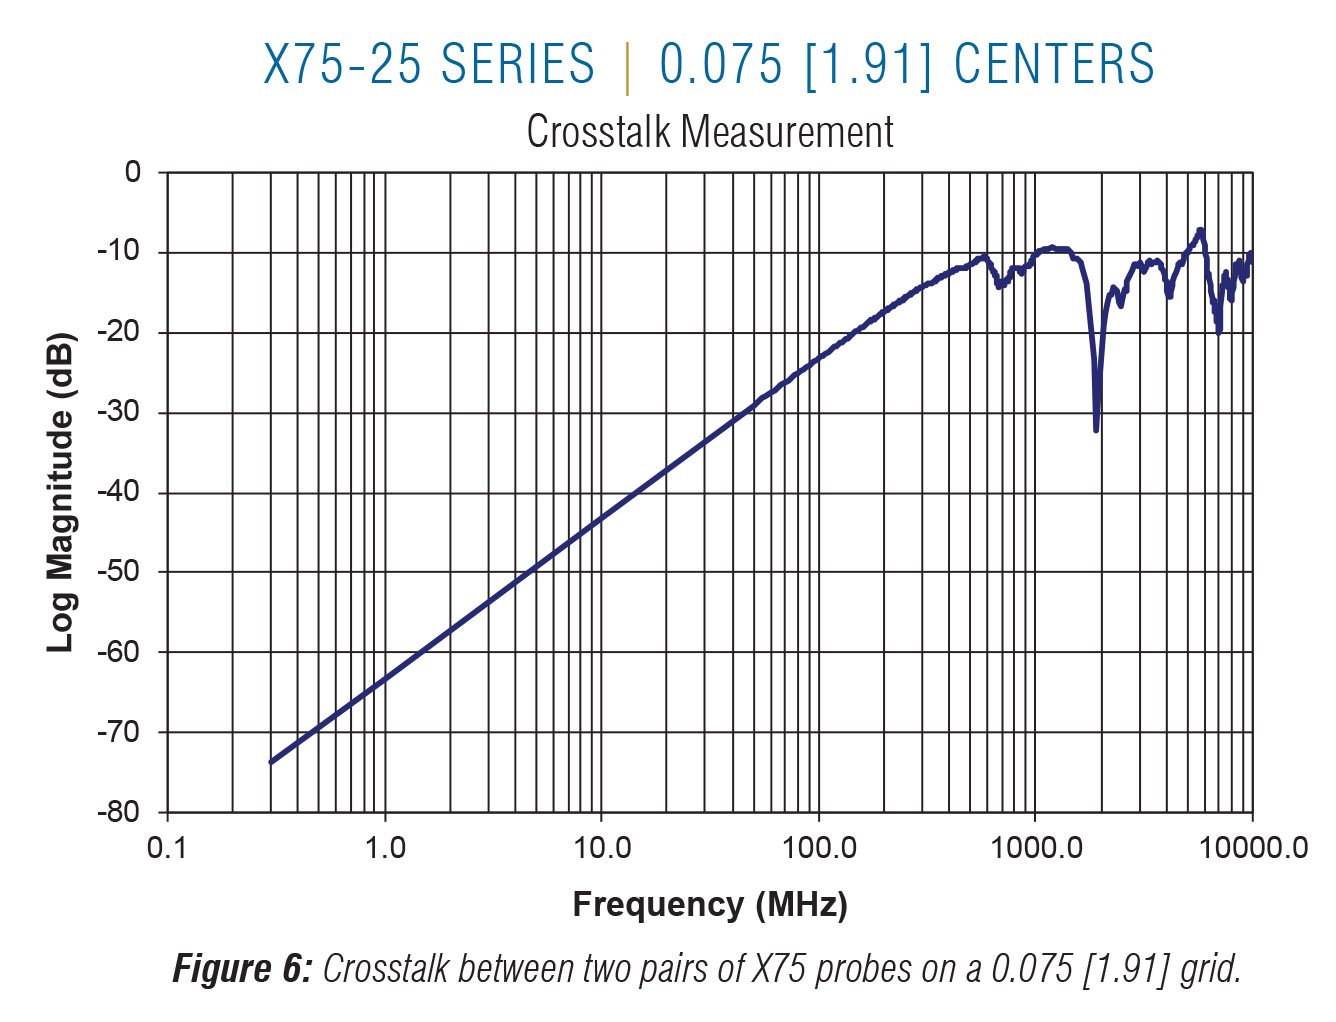 X75-25 Crosstalk on 0.075 centers